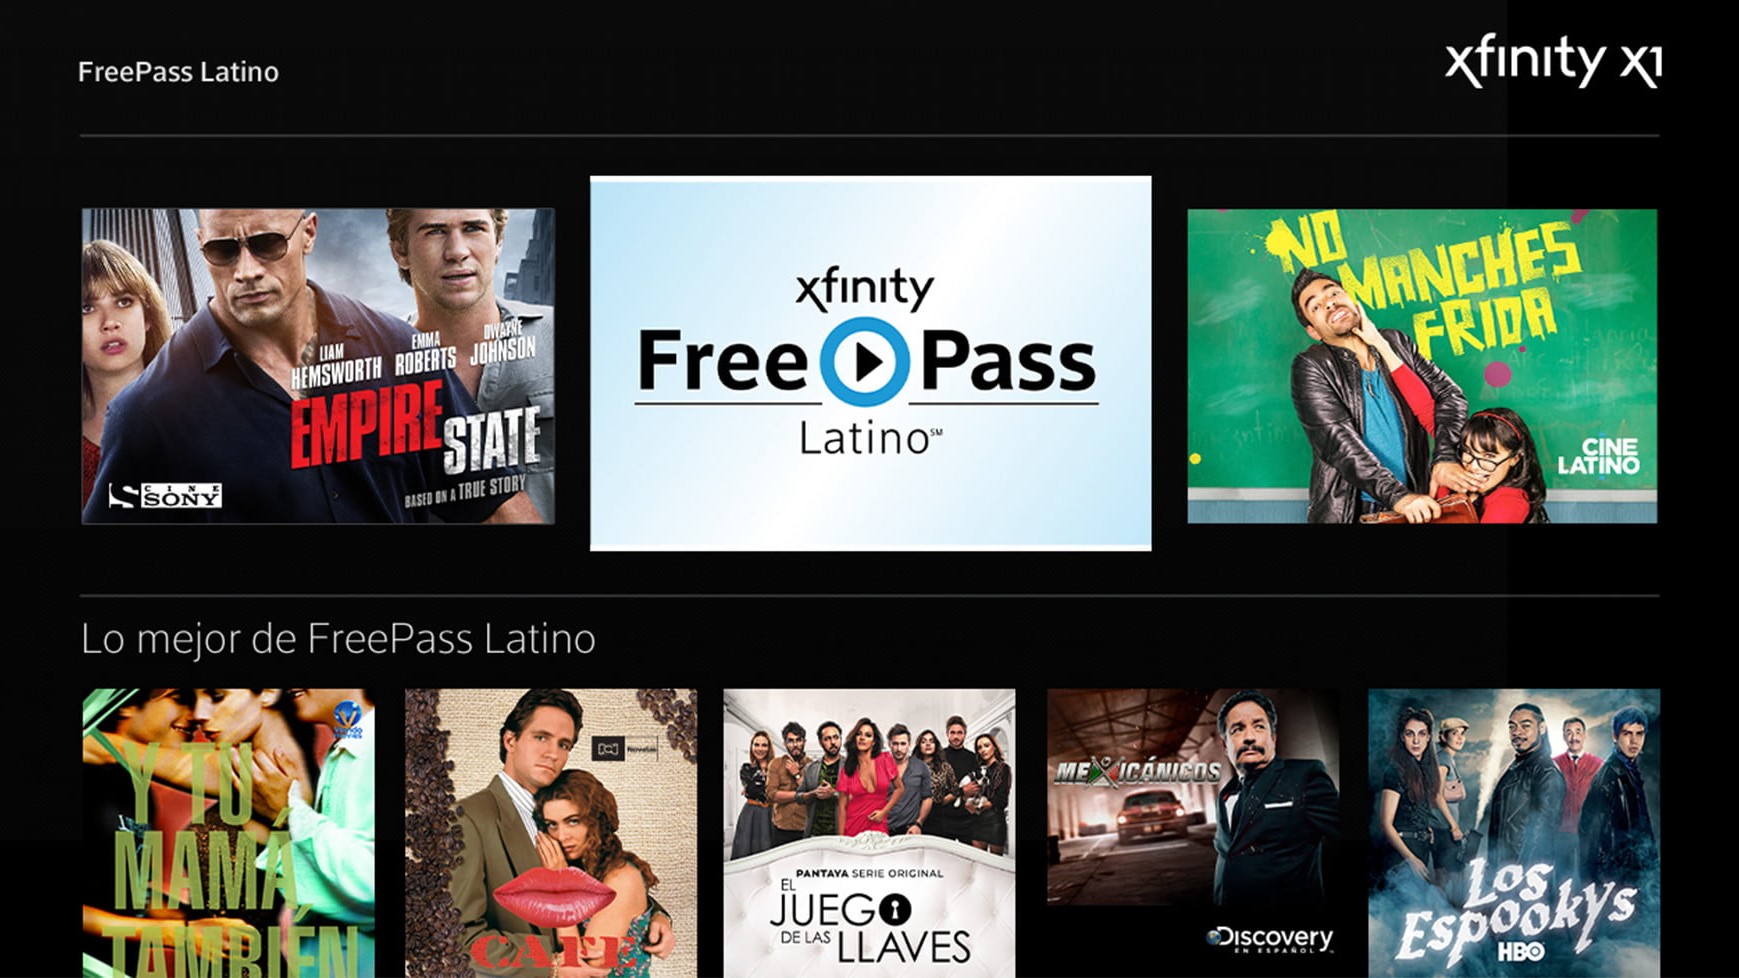 The FreePass Latino hub on Xfinity.